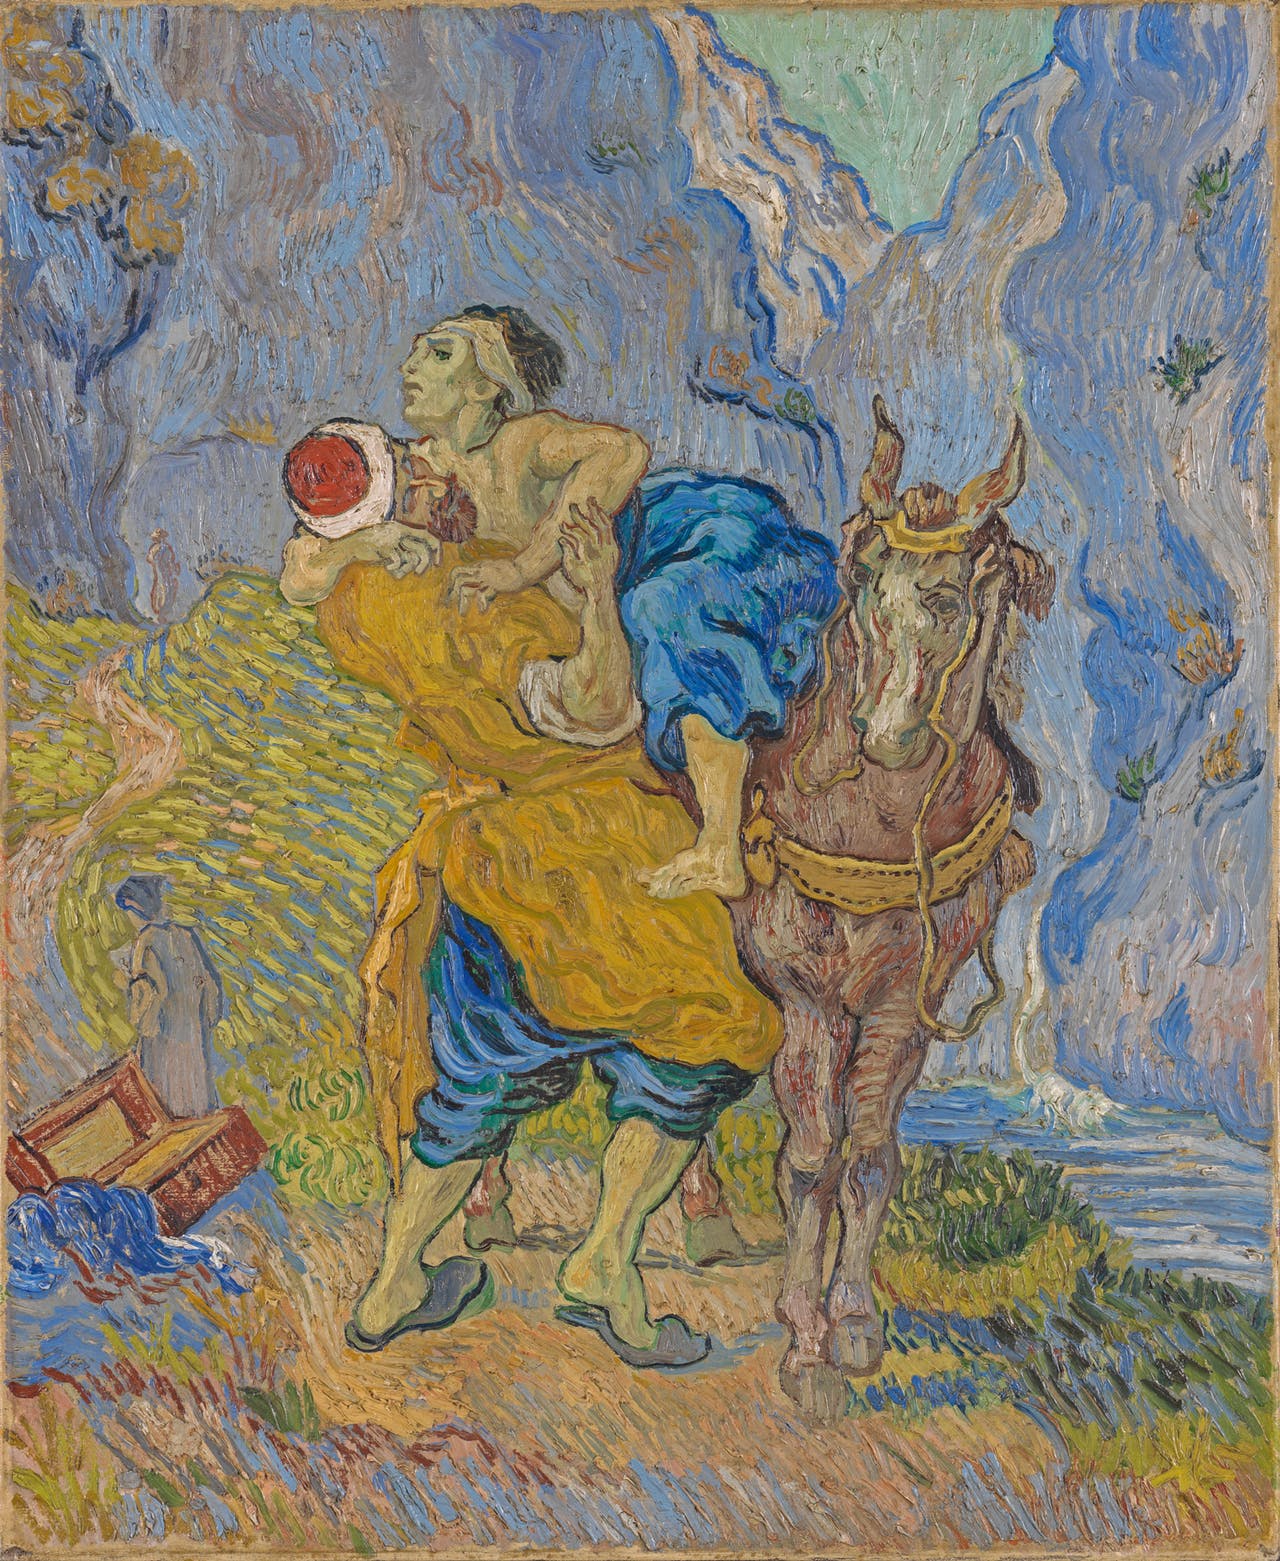 El Buen Samaritano by Vincent van Gogh - Early May 1890 - 73 × 59.5 cm Kröller-Müller Museum